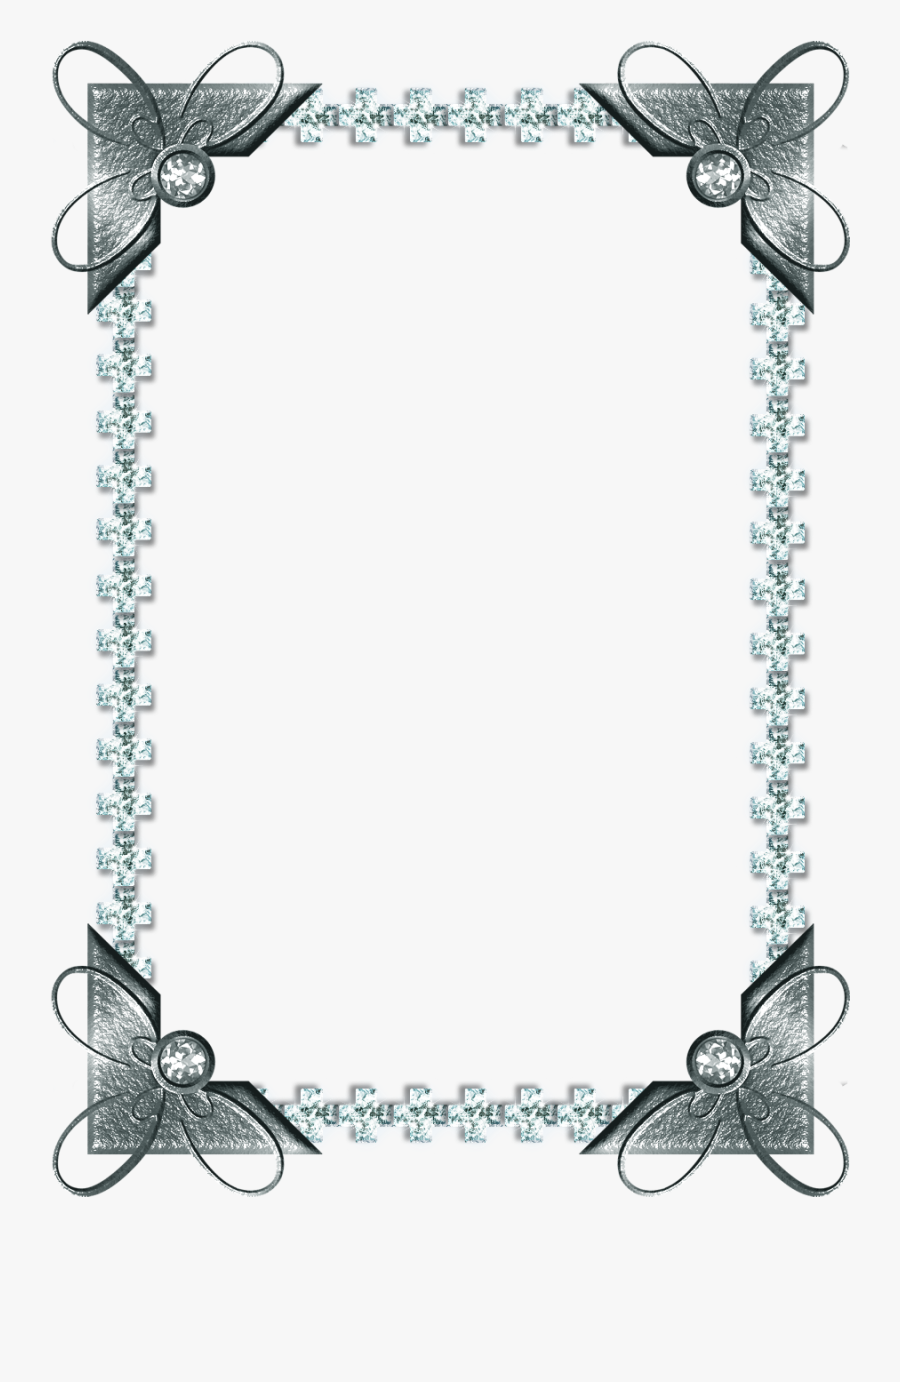 #mq #silver #frame #frames #border #borders - Pearl Frames Png, Transparent Clipart